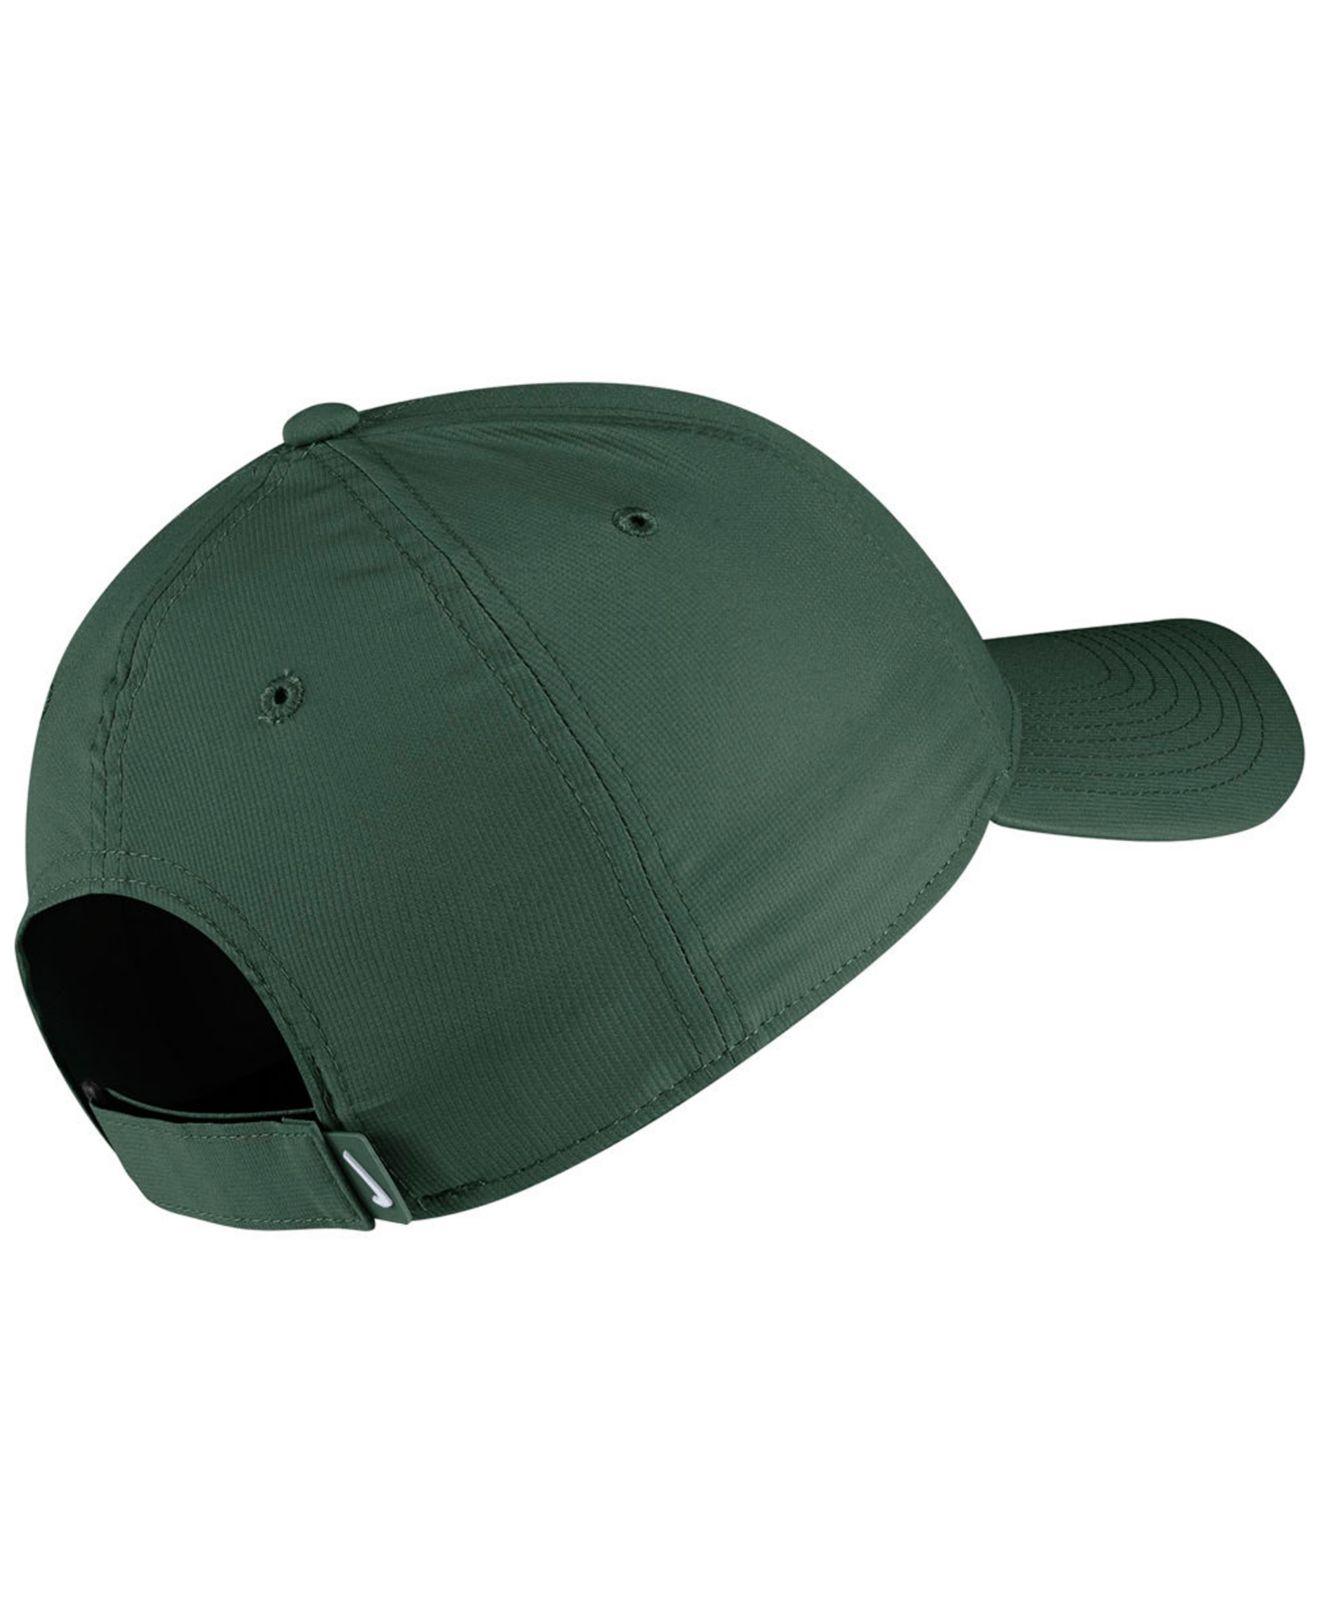 dark green nike hat